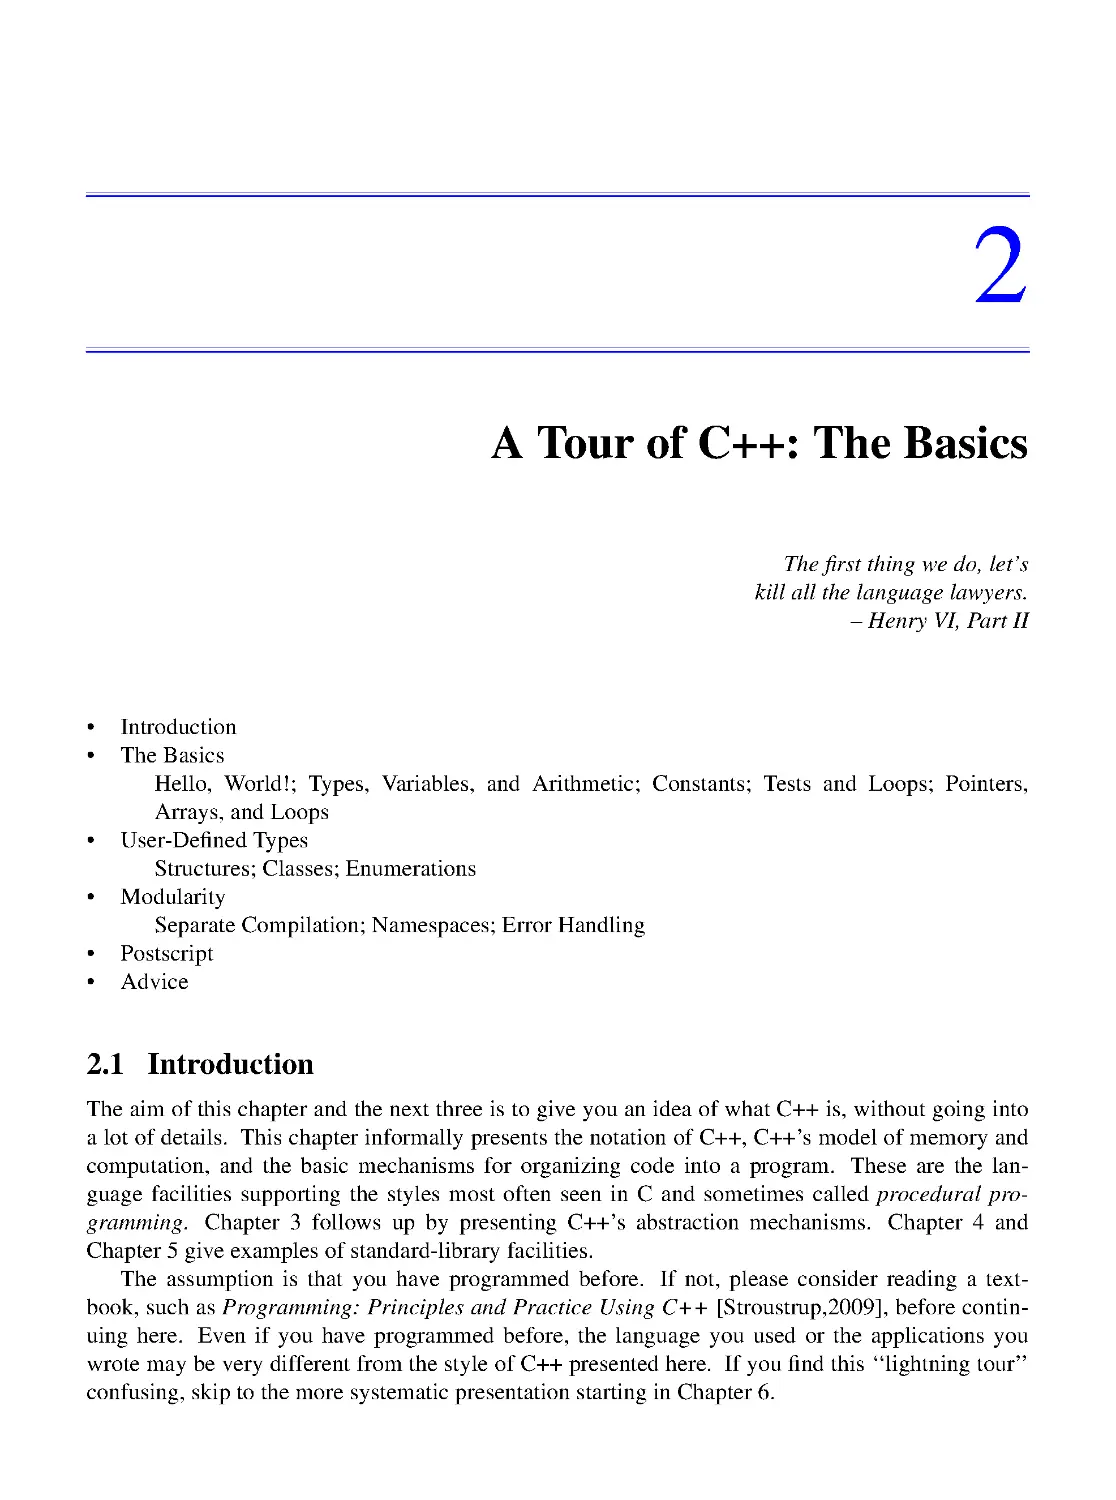 2. A Tour of C++: The Basics